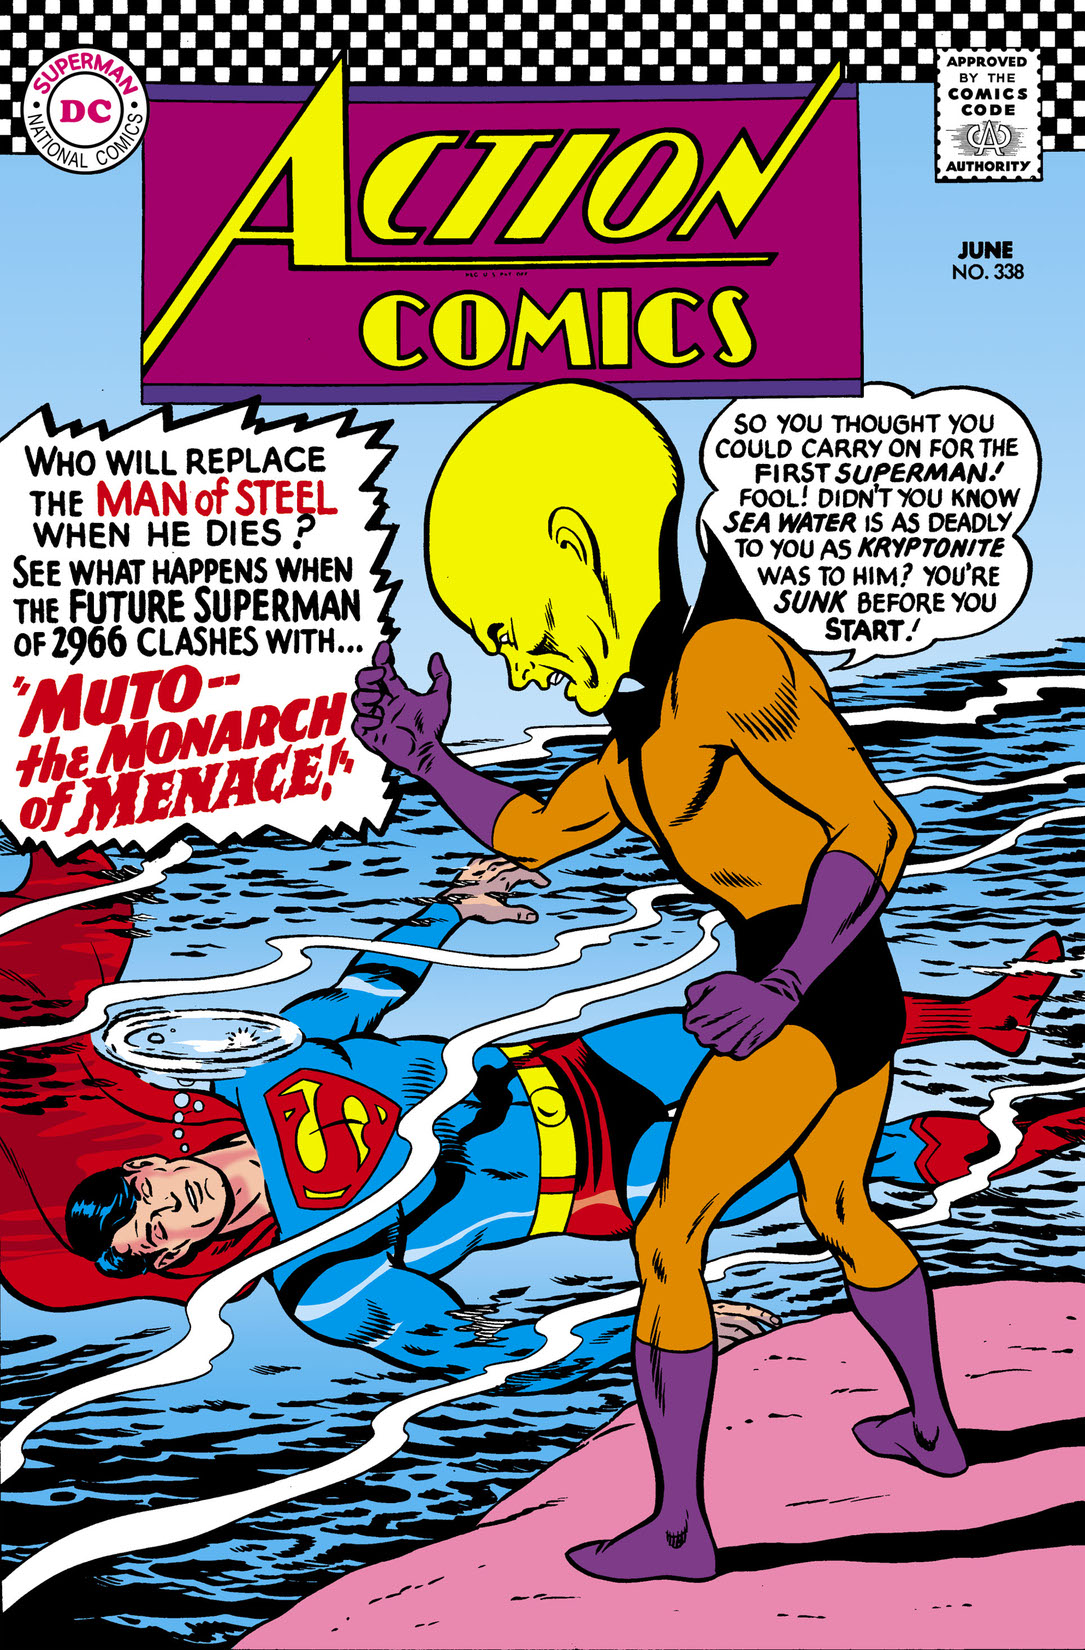 Action Comics (1938-2011) #338 preview images